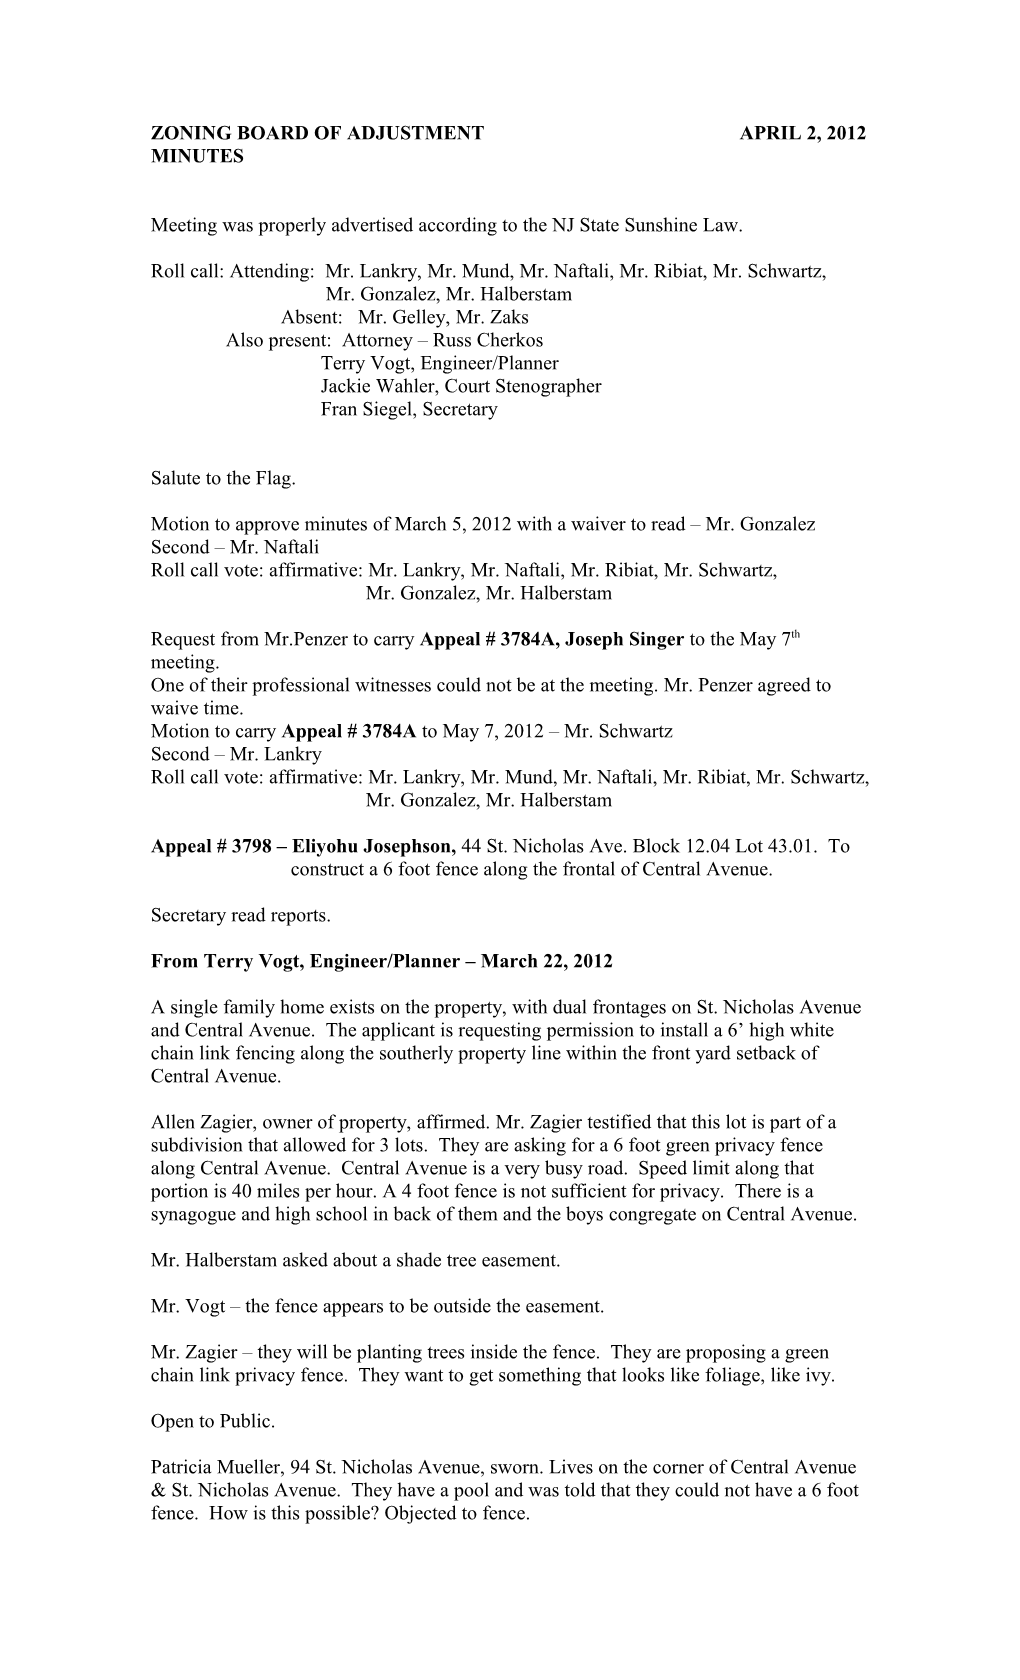 Zoning Board of Adjustment April 6, 2012